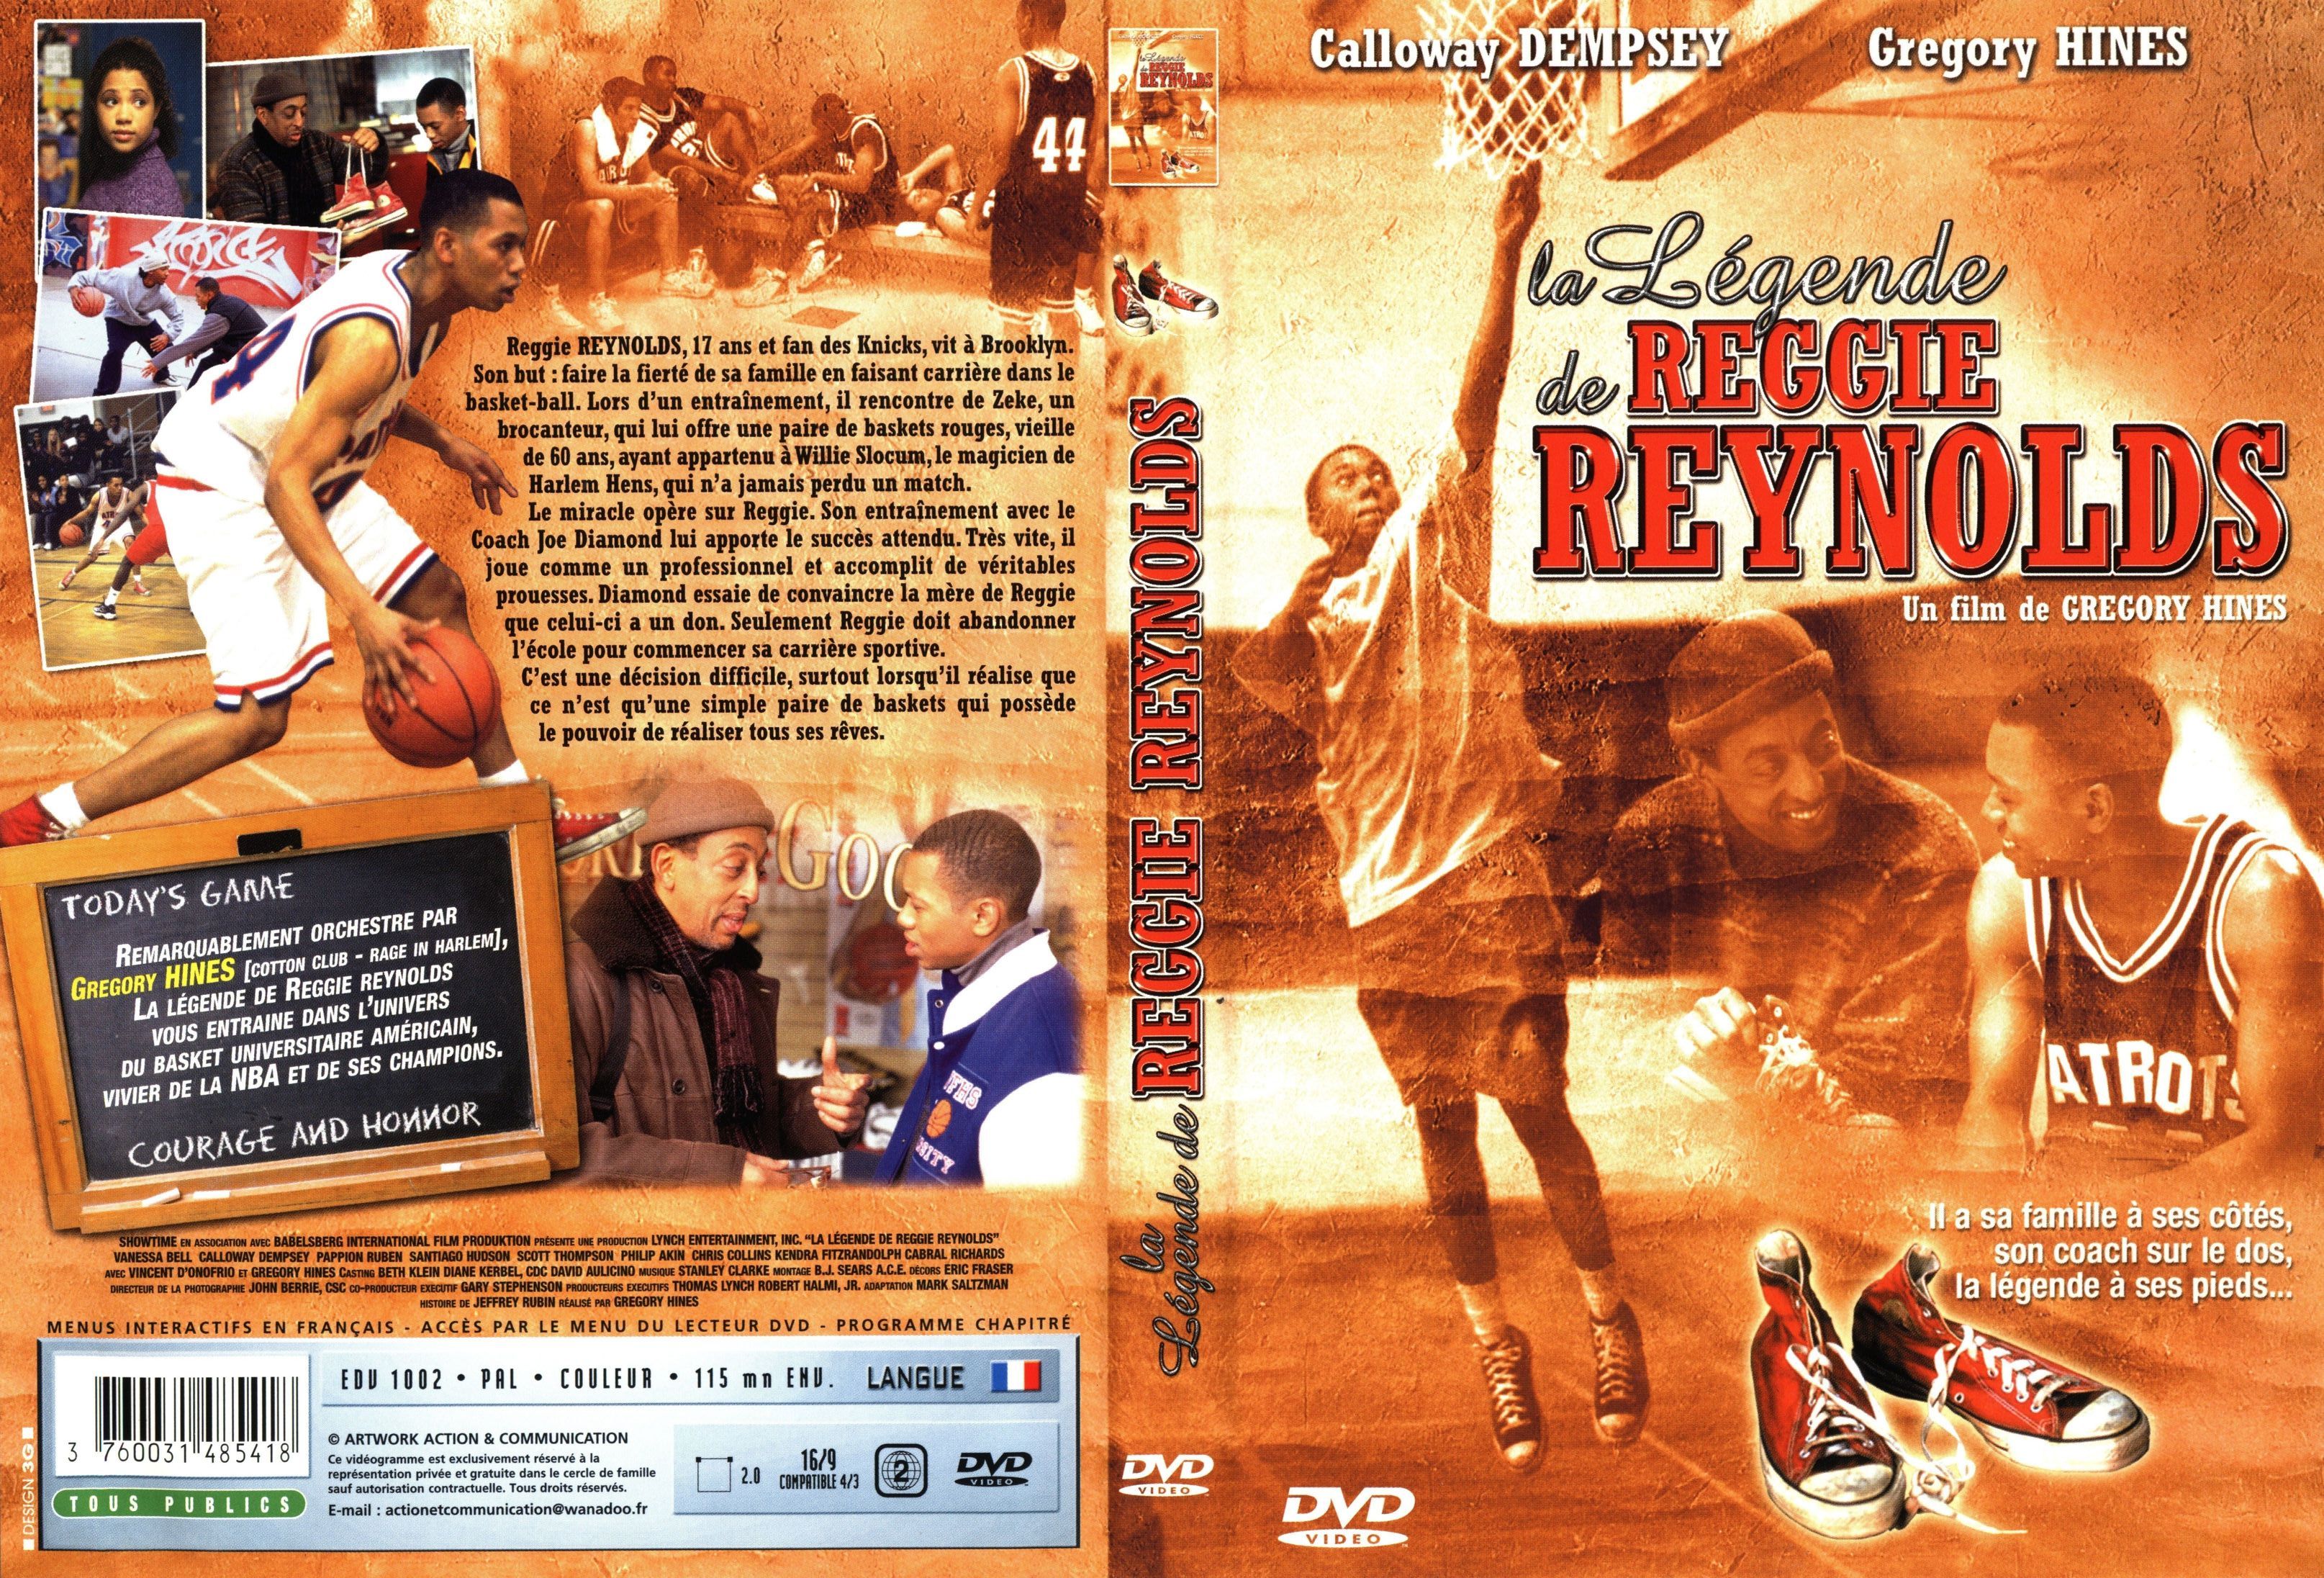 Jaquette DVD La lgende de Reggie Reynolds